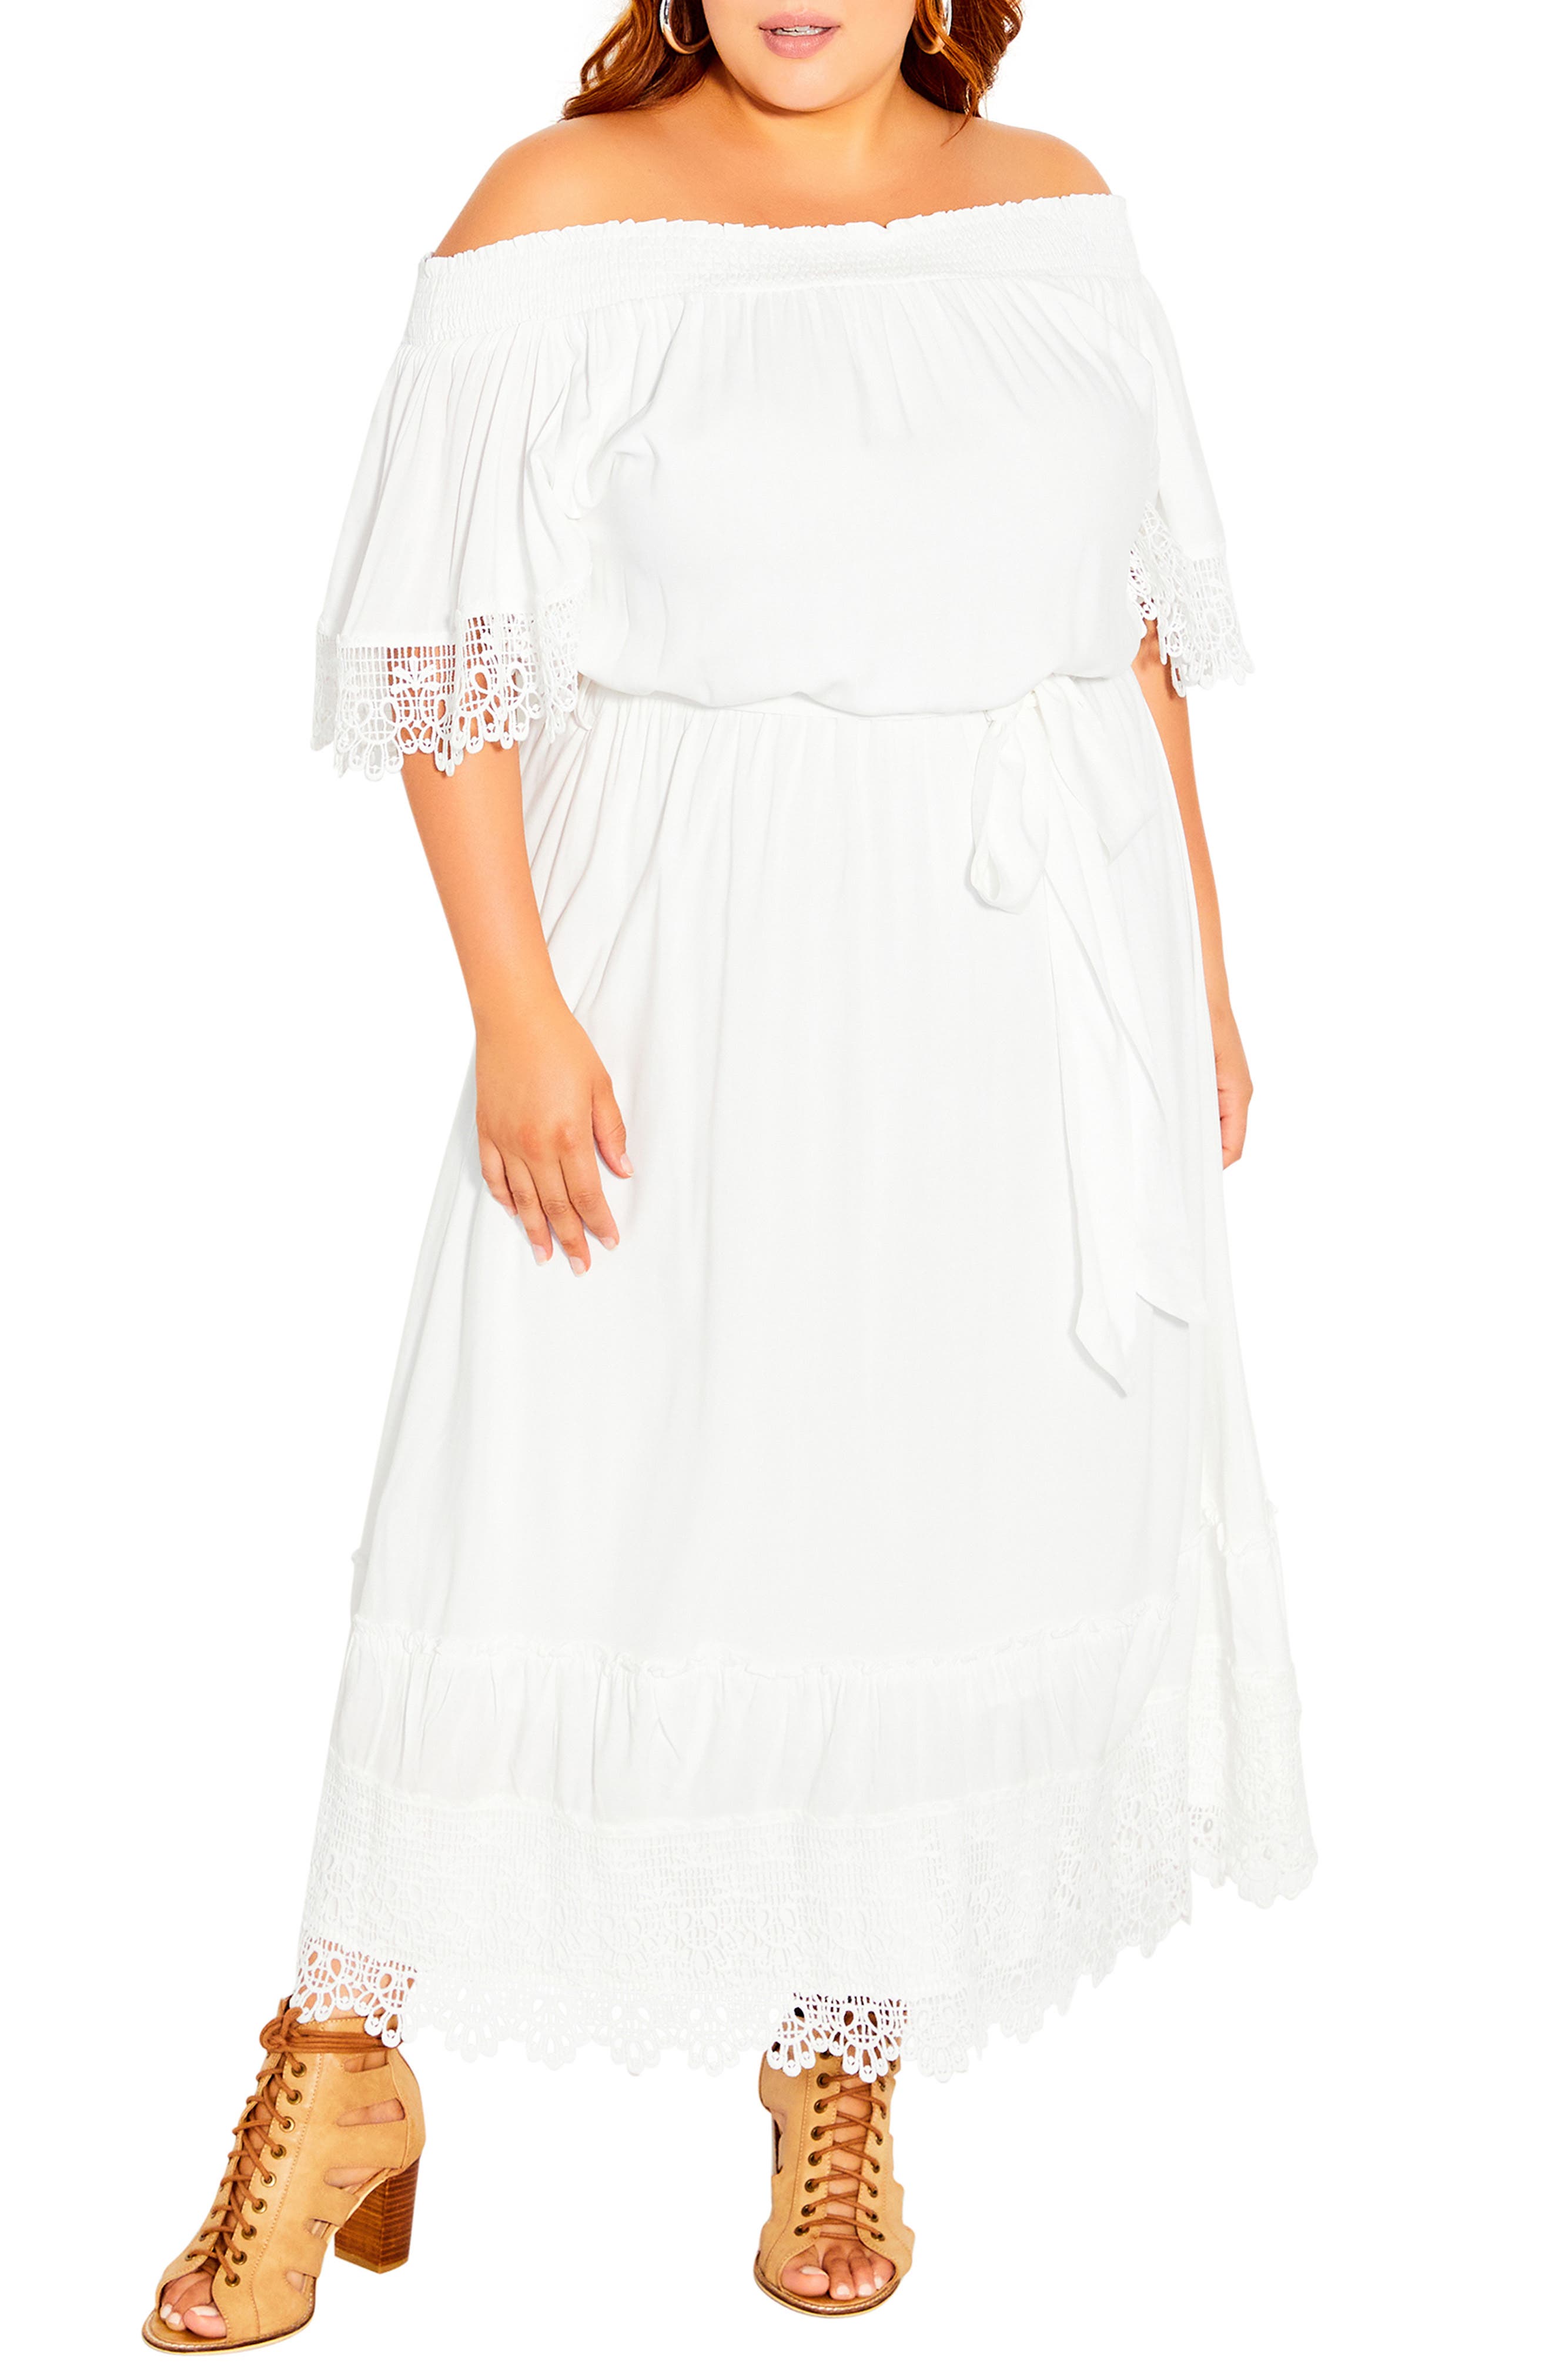 White Plus Size Dresses for Women ...